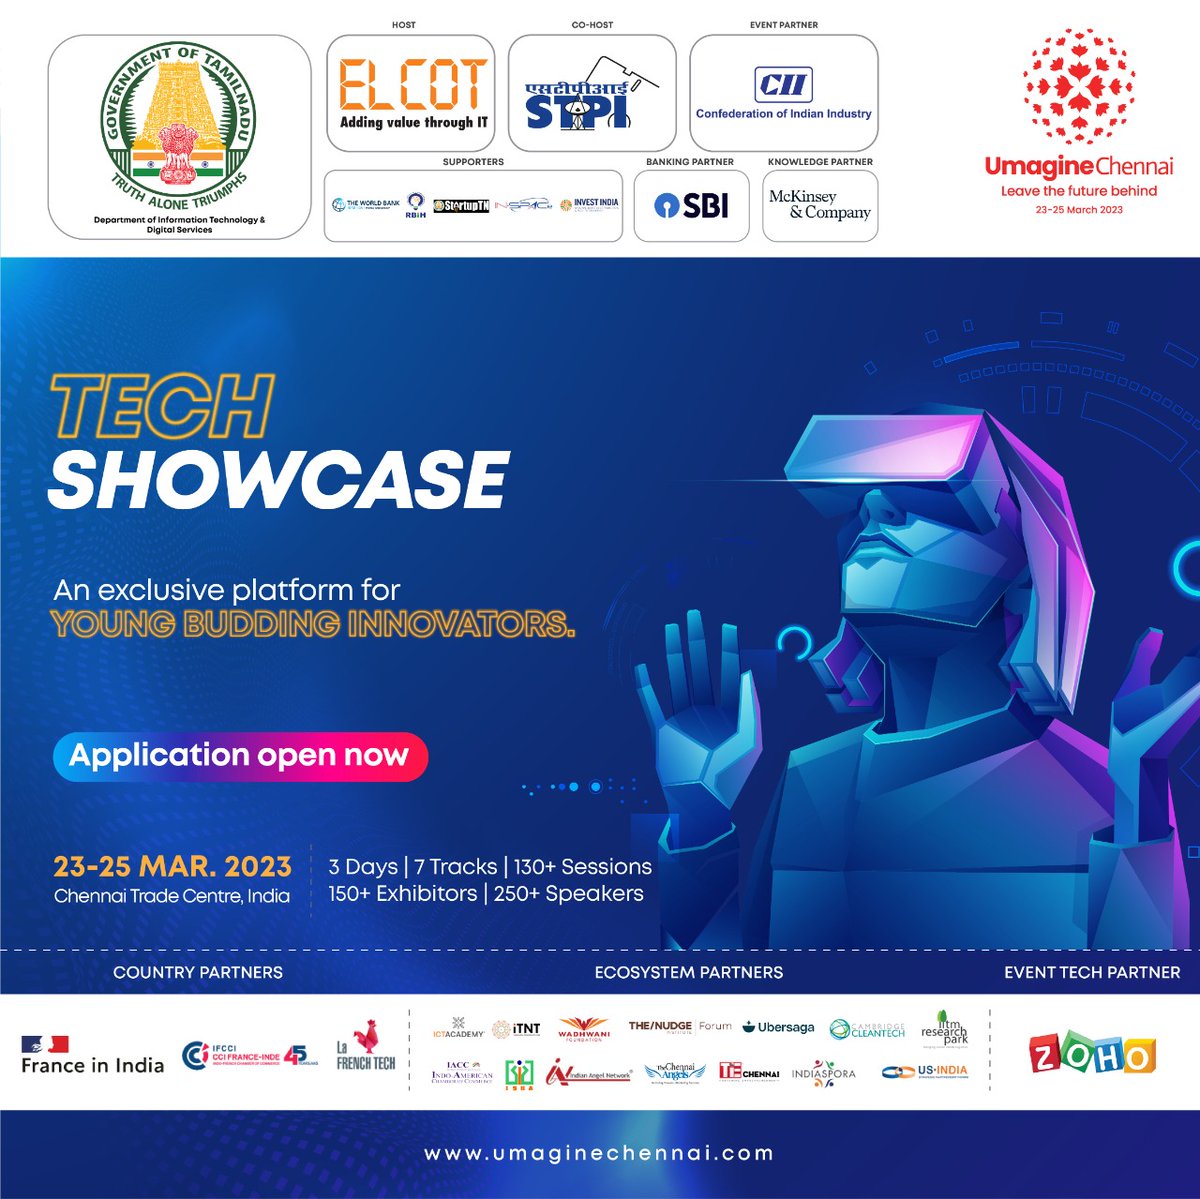 Techshow case is the perfect platform for ambitious young budding innovators to get their ideas off the ground! 
Register now - bit.ly/3GUFbls
@Manothangaraj @neerajmittalias  
@ELCOT_TN @stpiindia @FollowCII @TheStartupTN @TheOfficialSBI @investindia 
@McKinsey
#umagine